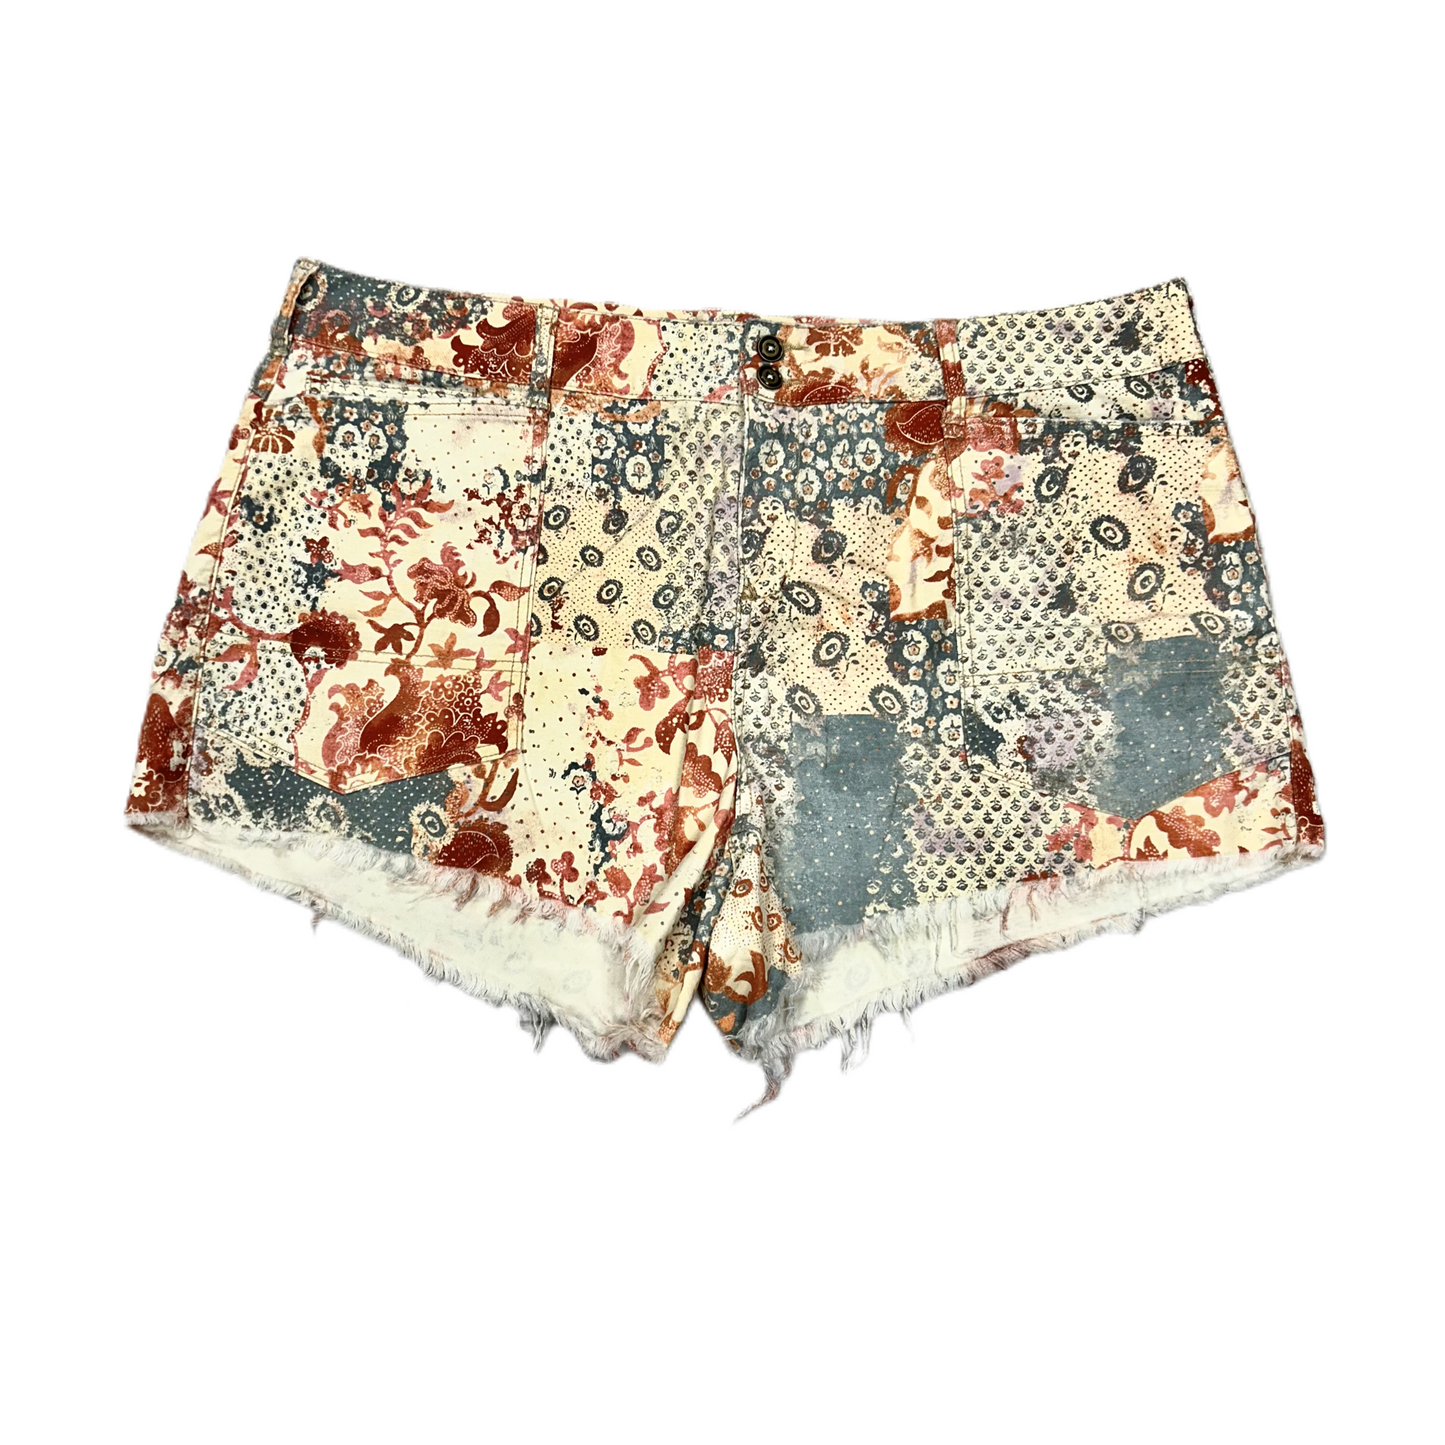 Paisley Print Shorts By Pilcro, Size: 22w